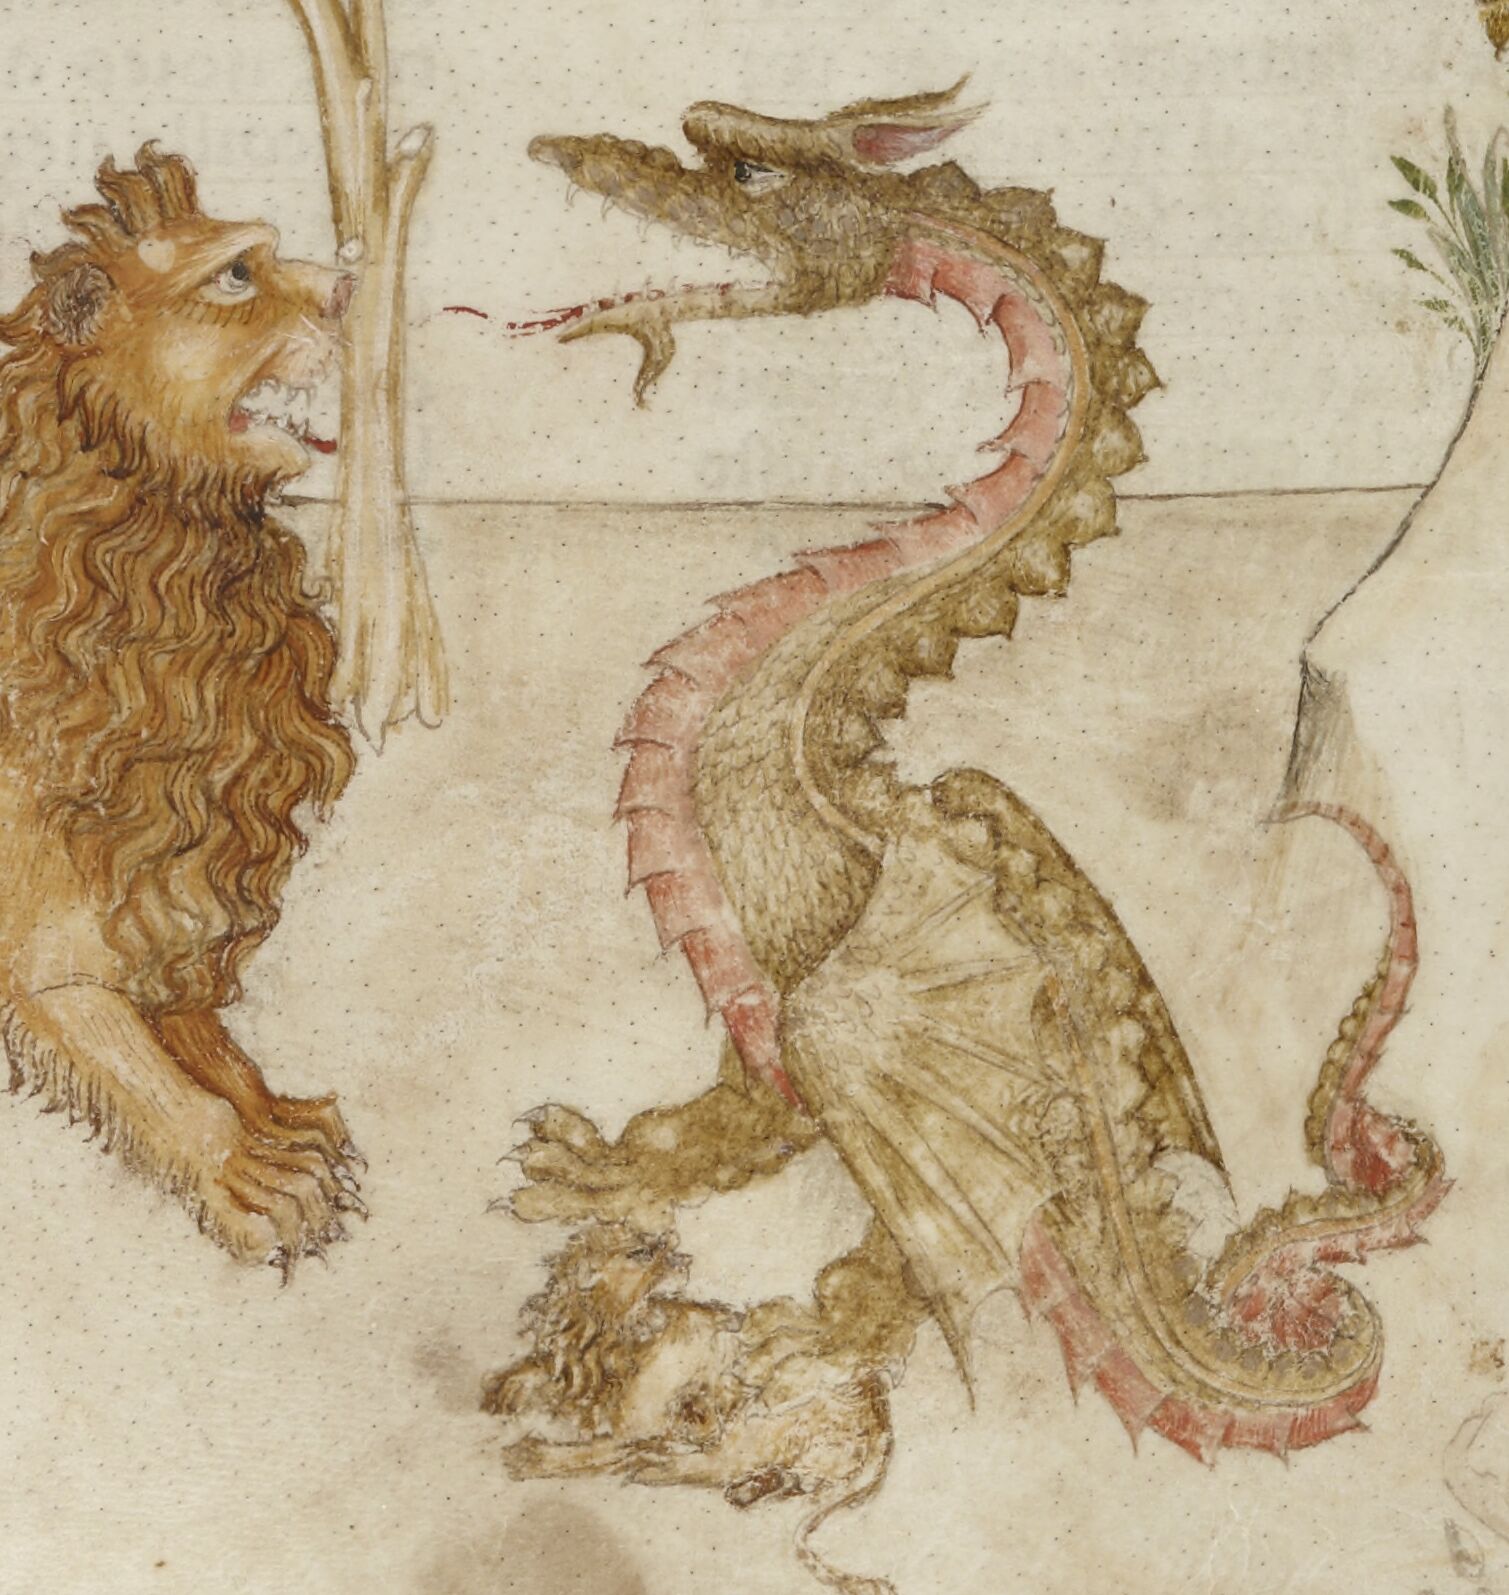 Dragon steals a lioncub